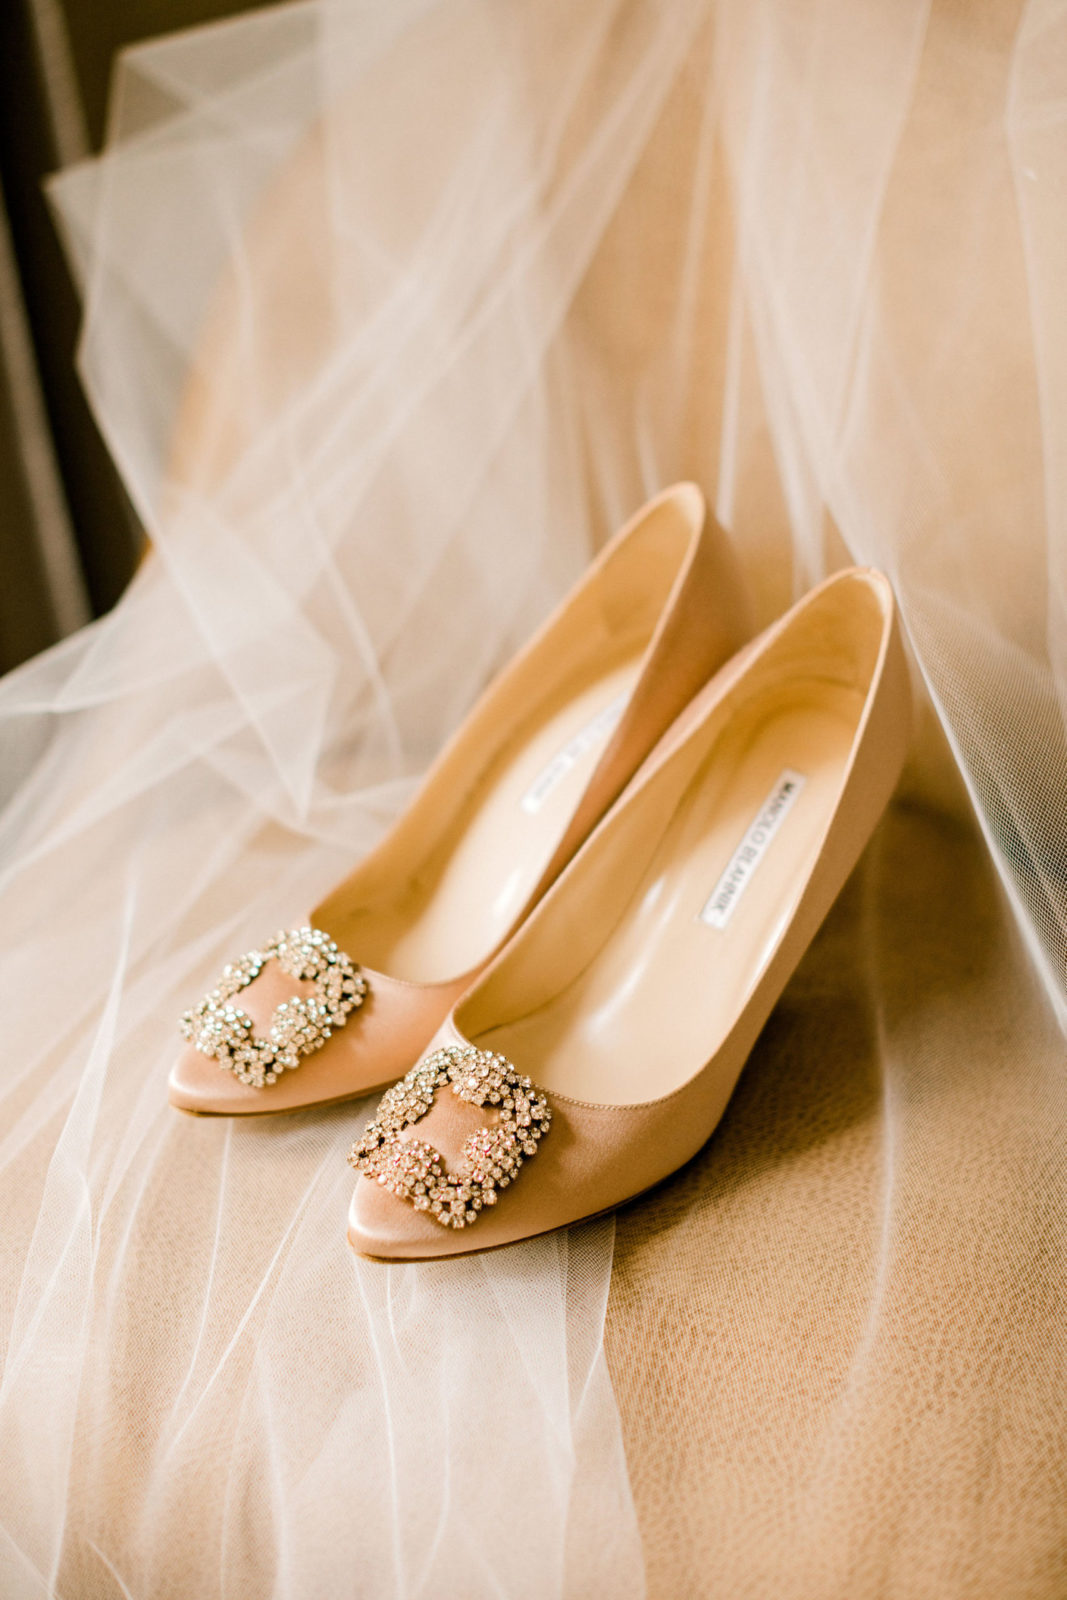 Cream bridal high heels with rhinestone details